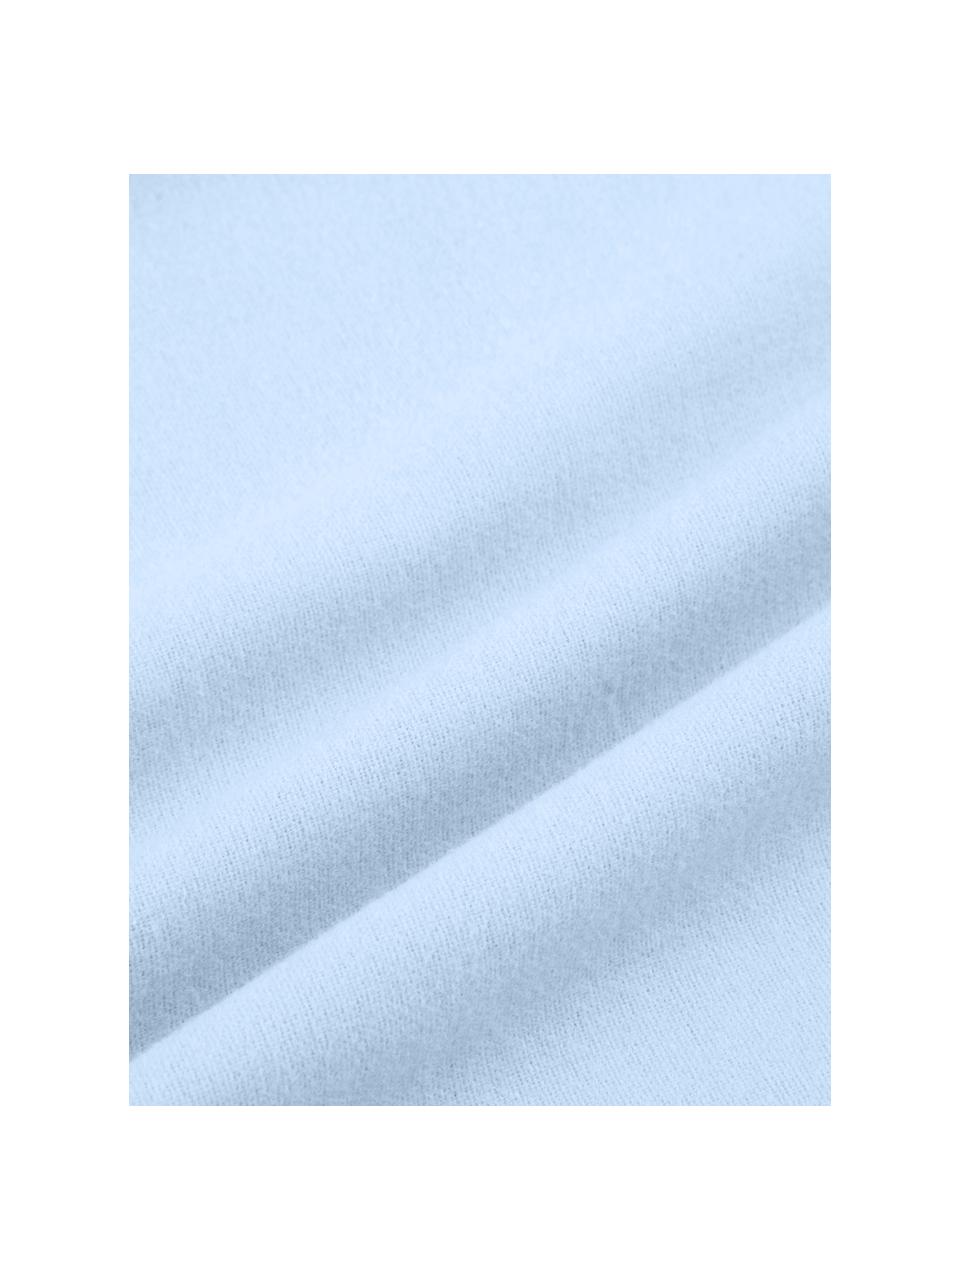 Flanell-Kissenbezüge Biba in Hellblau, 2 Stück, Webart: Flanell Flanell ist ein k, Hellblau, 40 x 80 cm